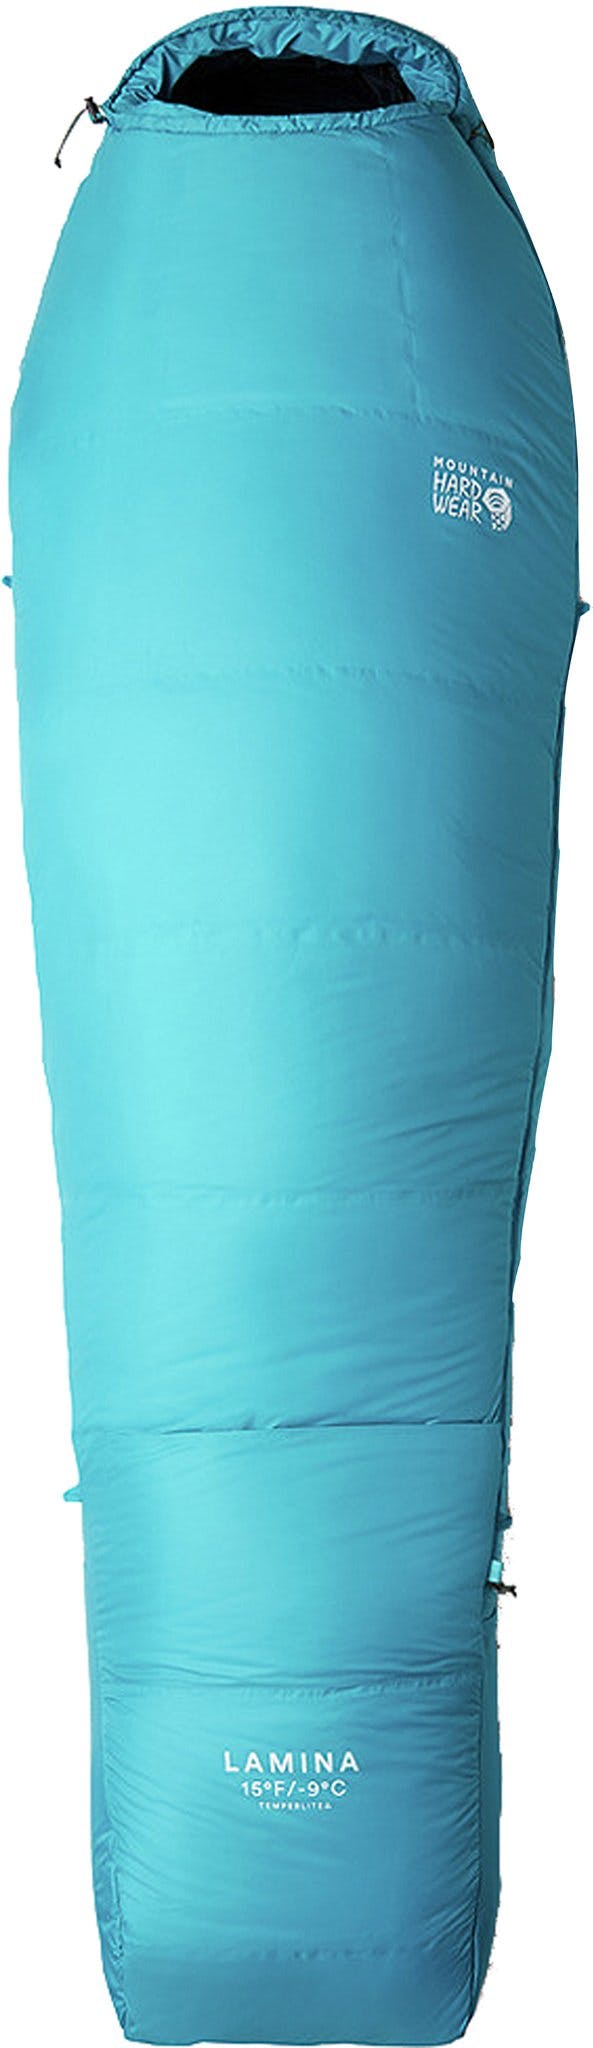 Product image for Lamina Regular Sleeping Bag 15°F/-9°C